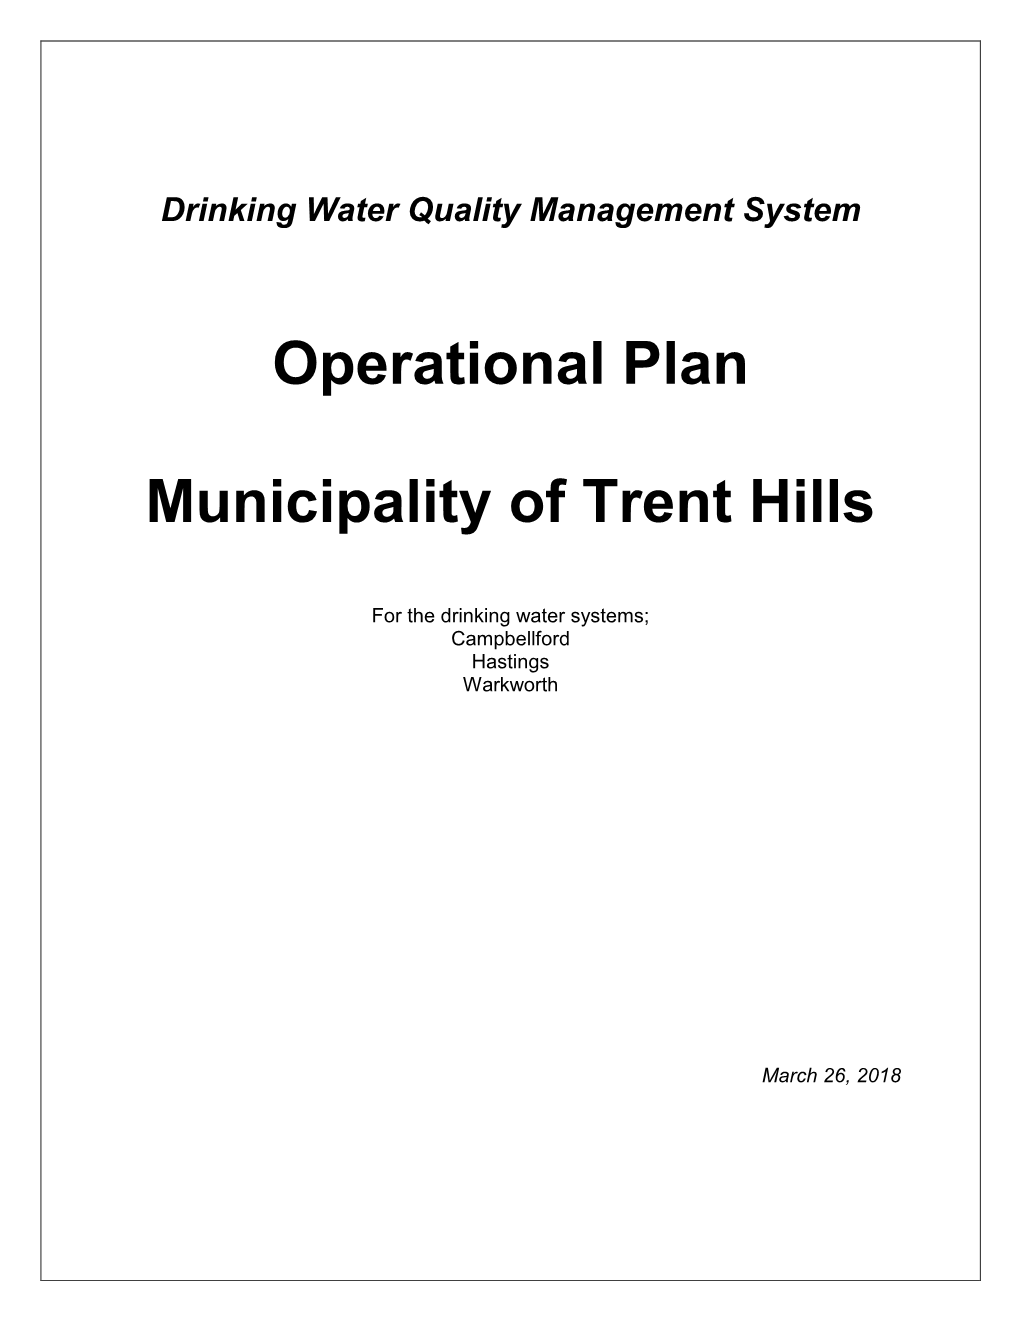 Operational Plan Municipality of Trent Hills